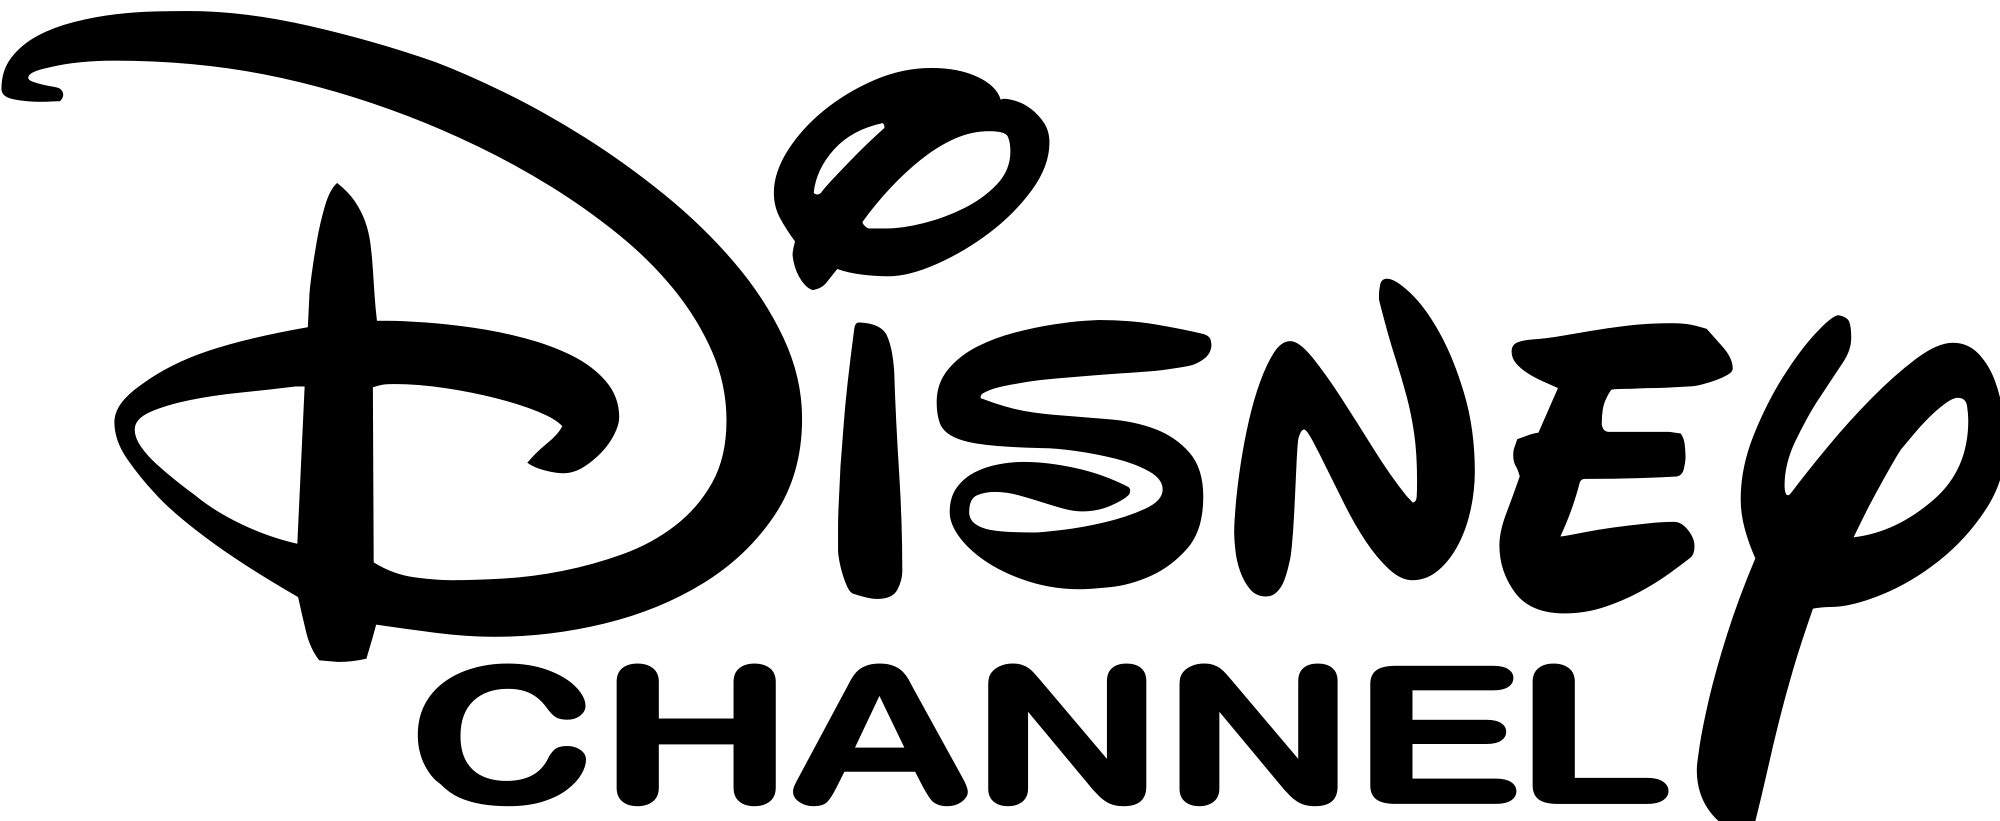 Walt Disney Original Logo - Walt Disney logo PNG images free download